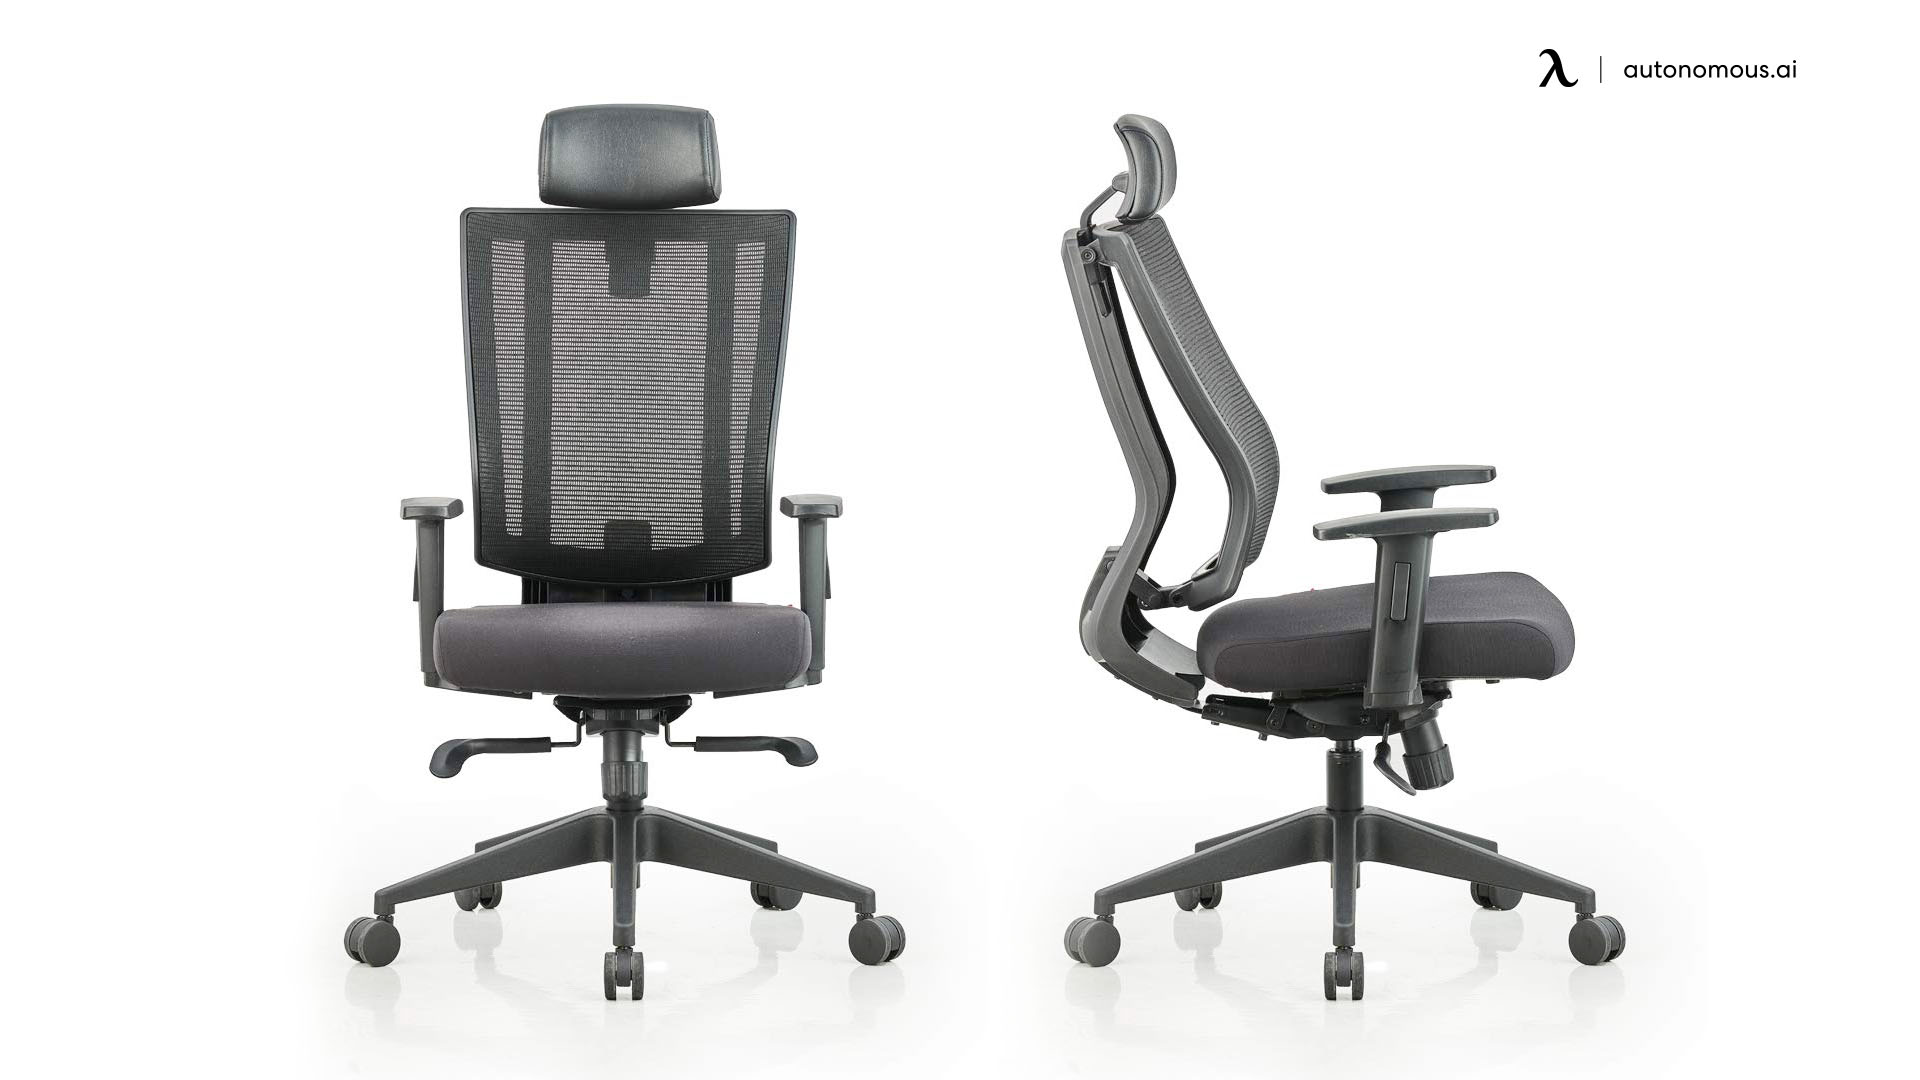  Featherlite Liberate High Back Ergonomic Office Chair